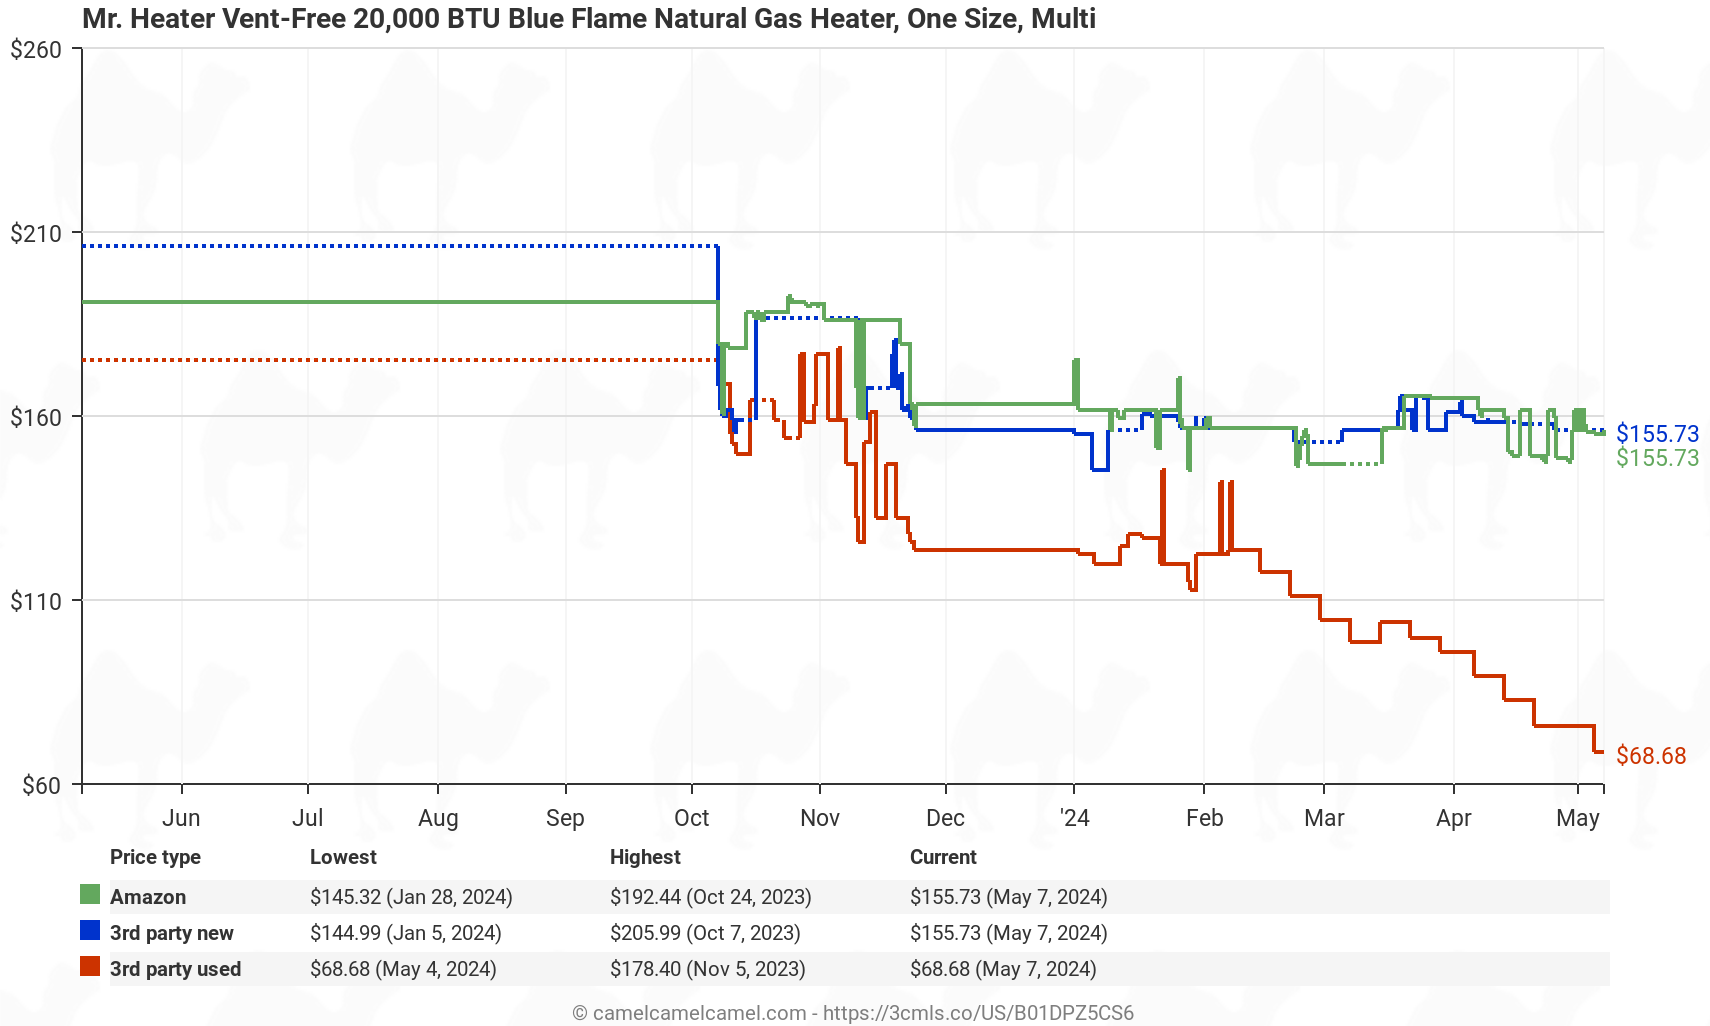 Mr. Heater Vent-Free 20,000 BTU Blue Flame Natural Gas Heater, One Size, Multi - Price History: B01DPZ5CS6